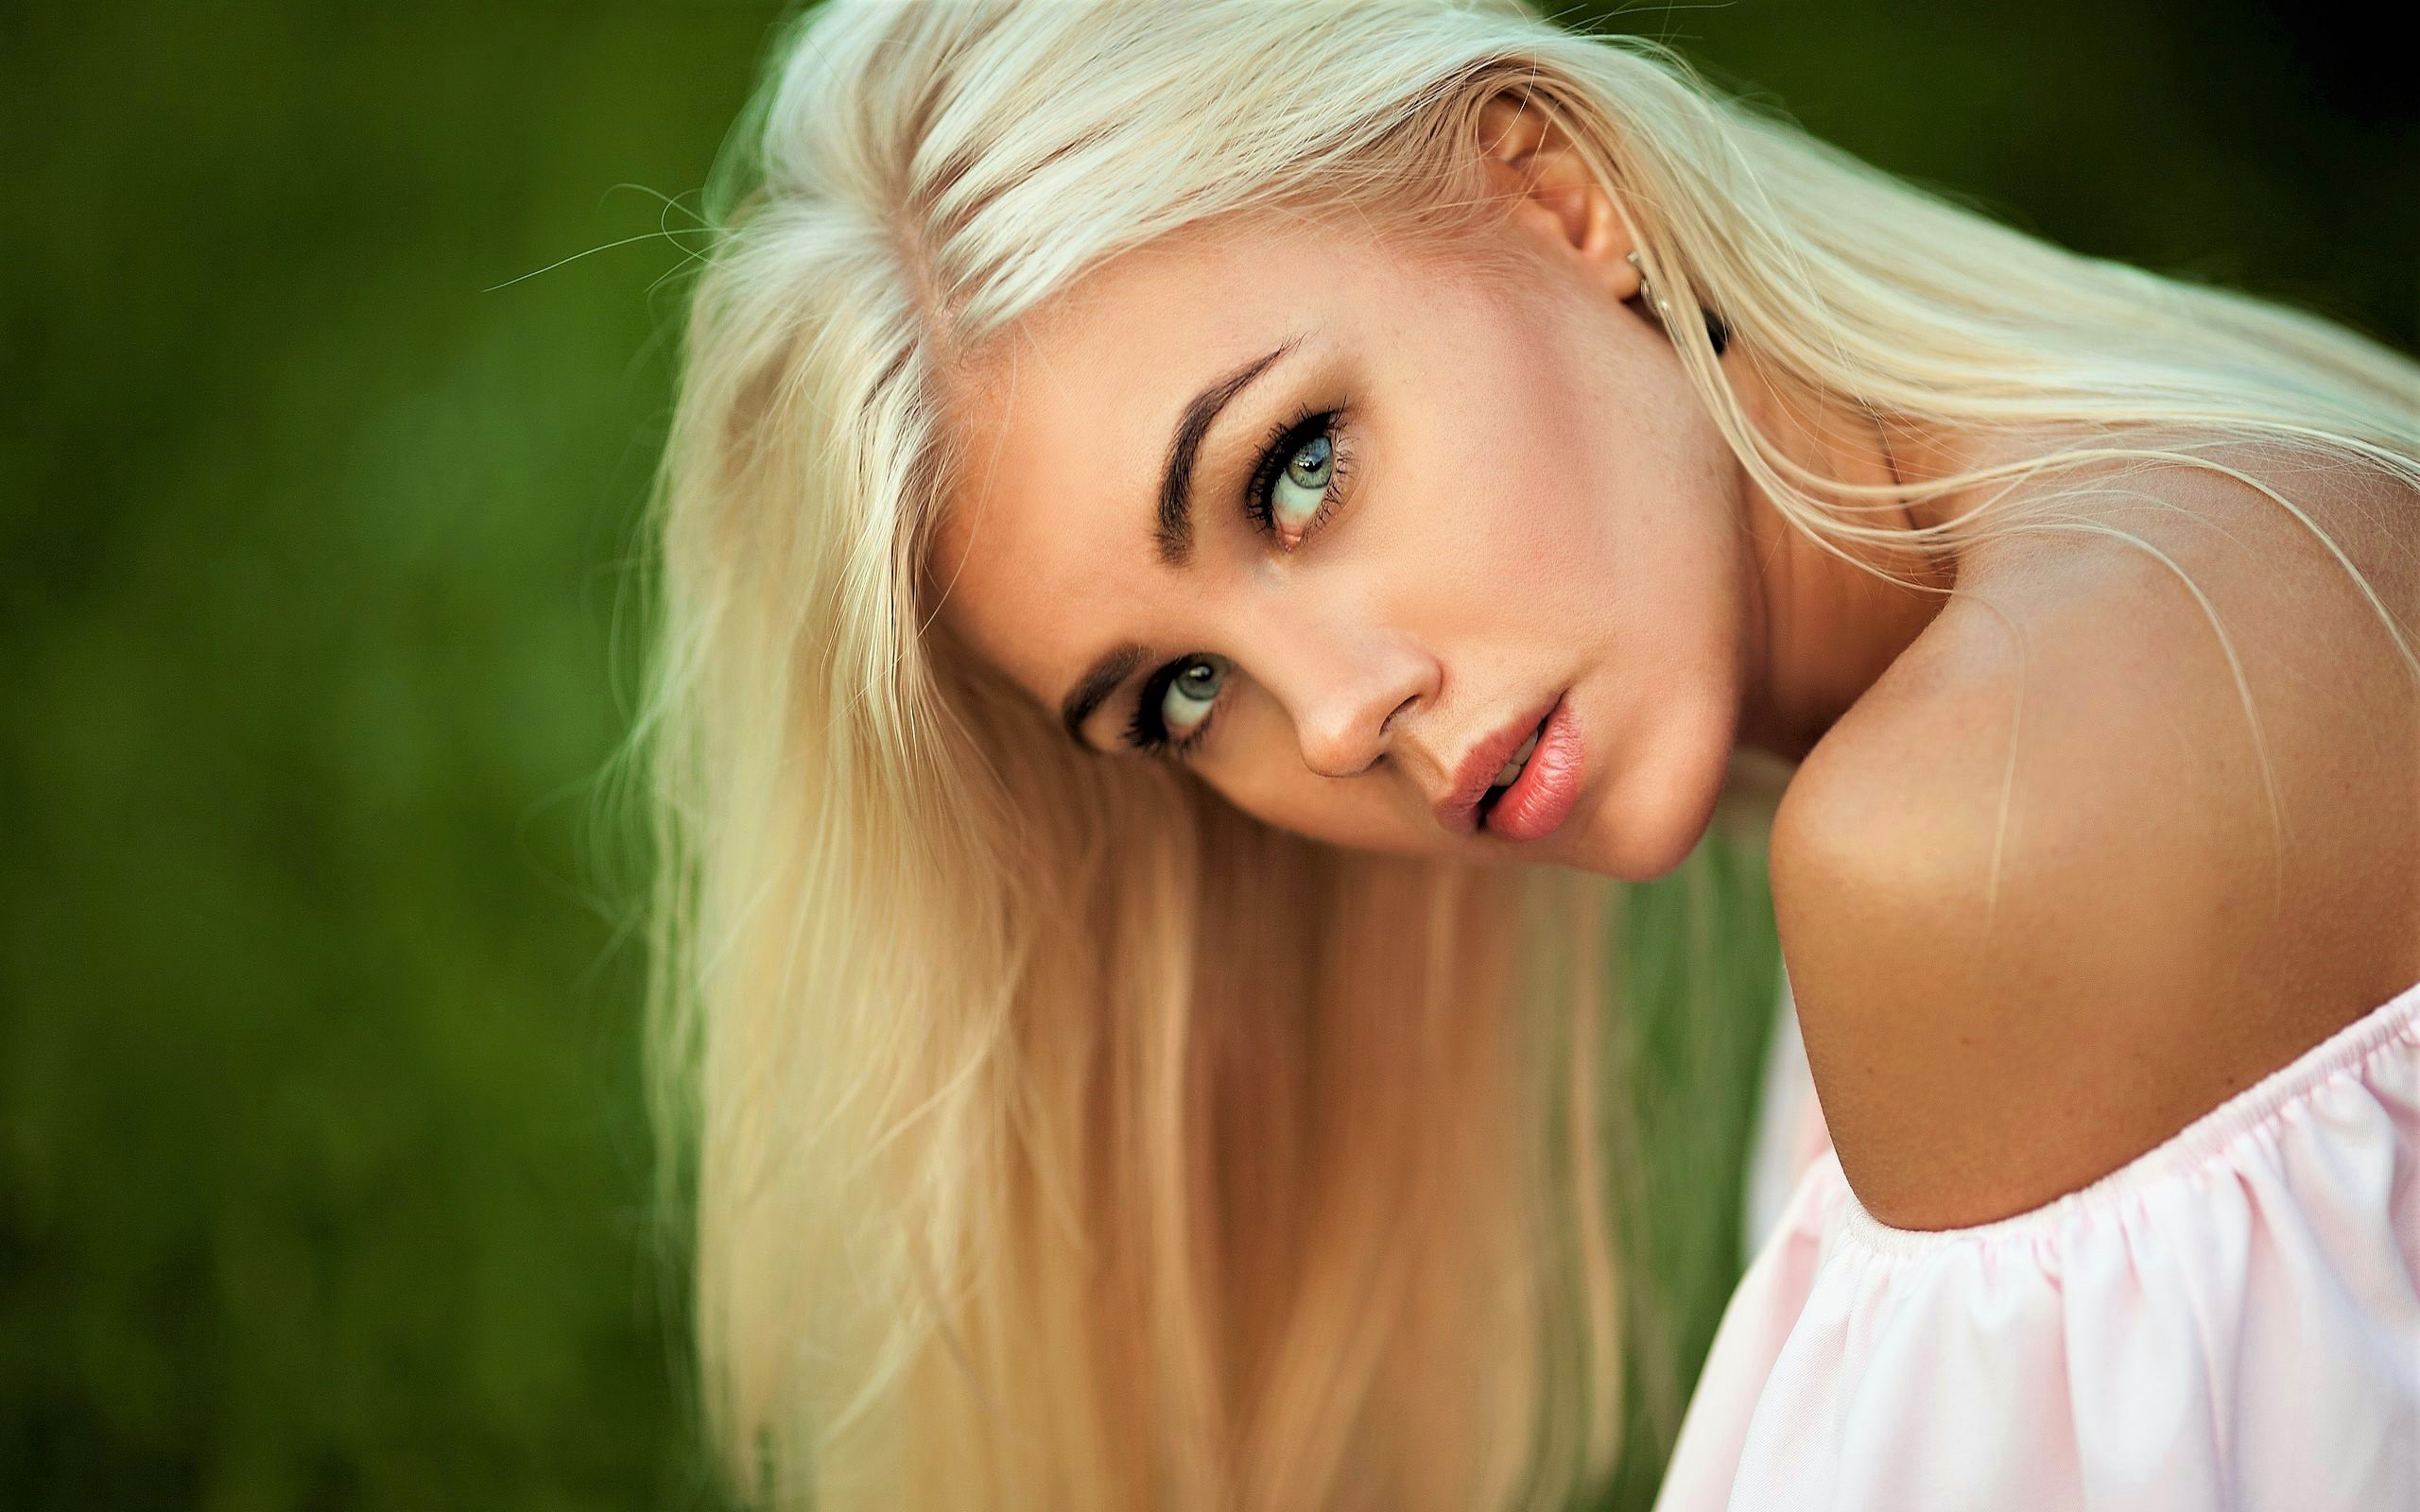 Beautifull blonde girl showing perfect